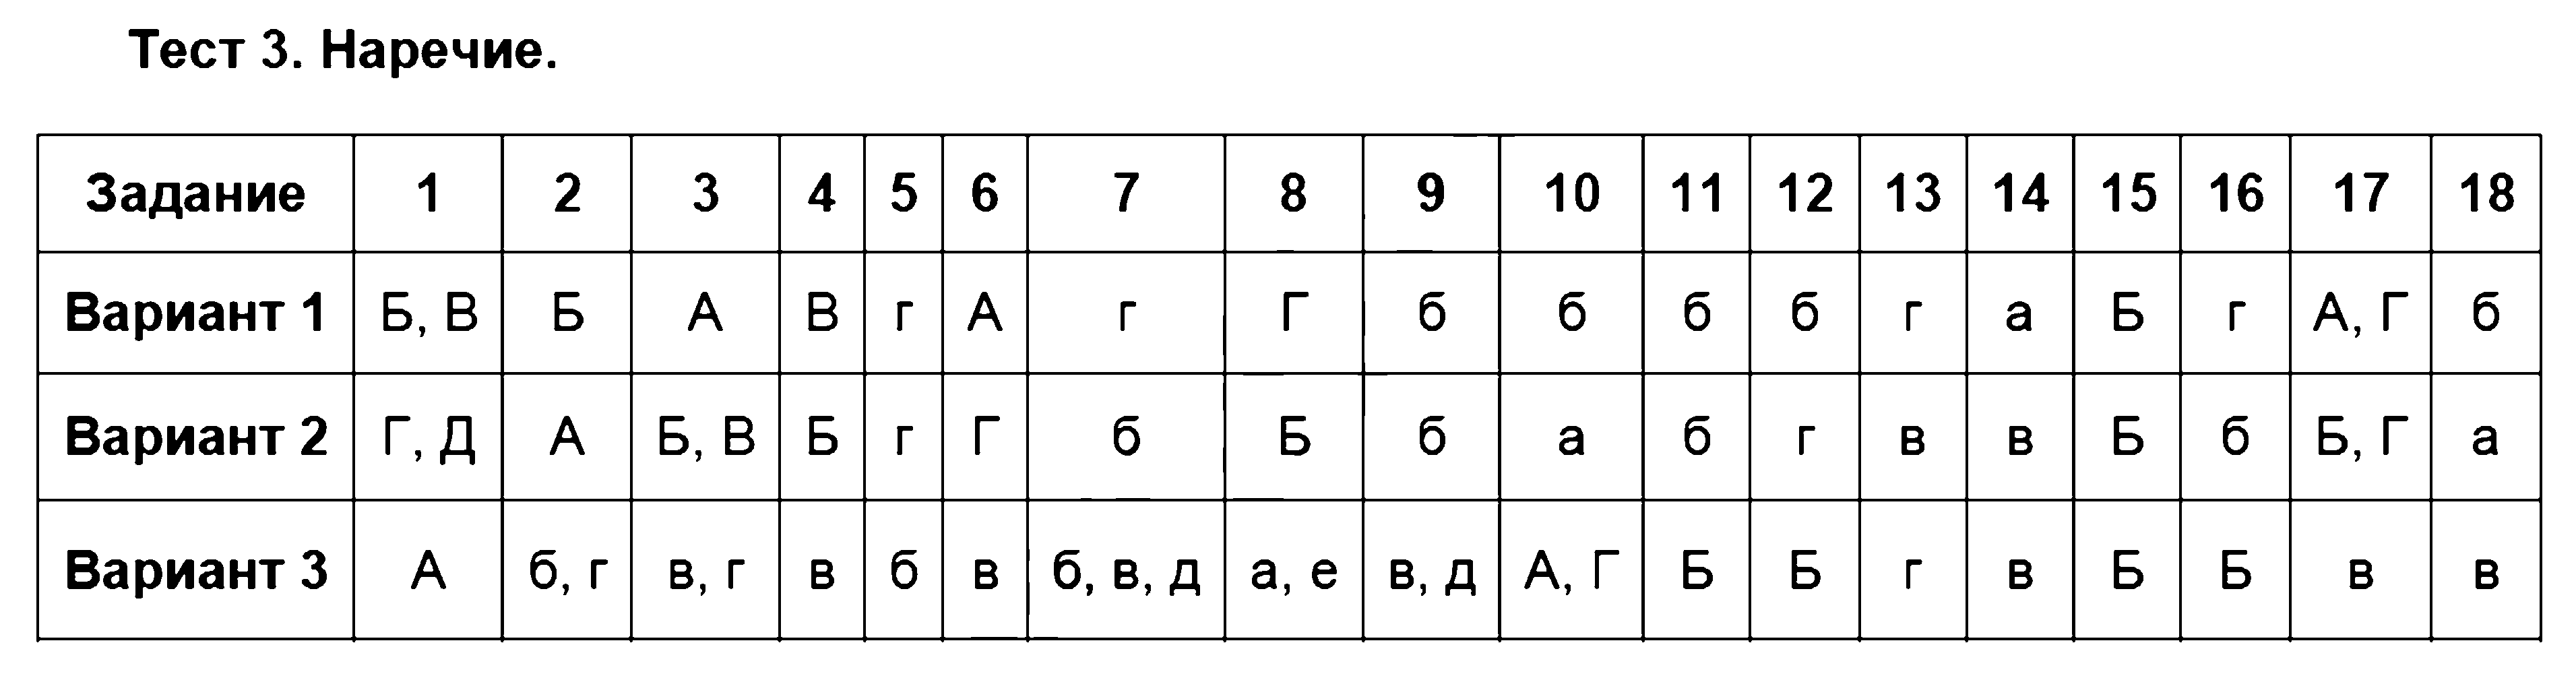 ГДЗ Русский язык 7 класс - Тест 3. Наречие